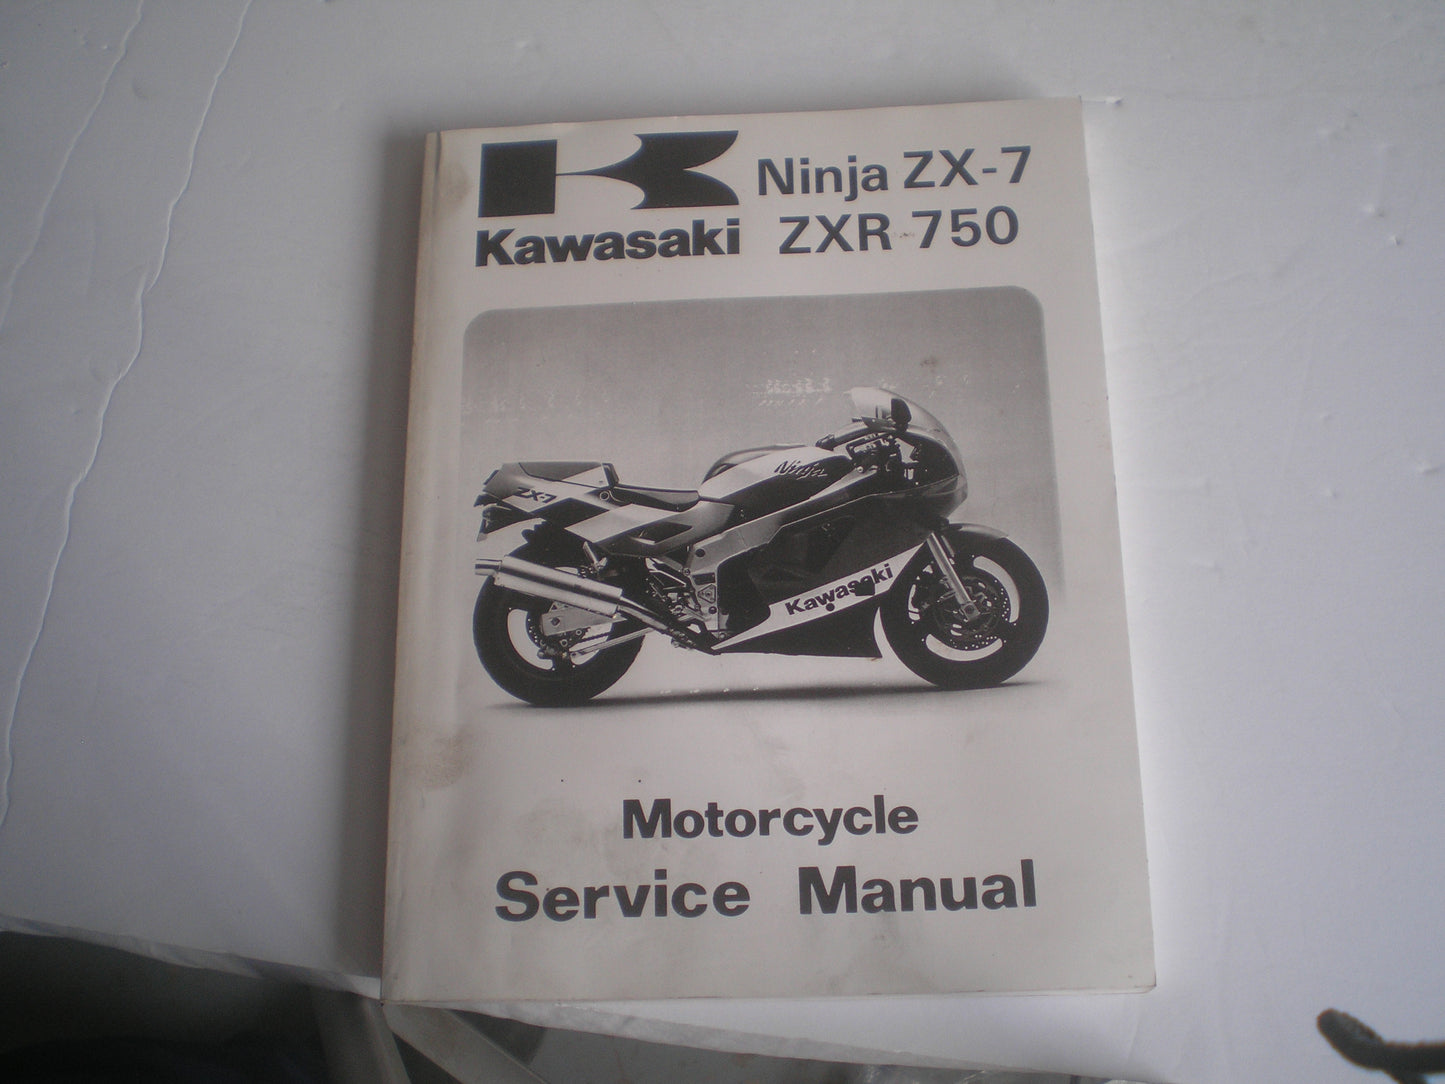 KAWASAKI ZX750 H1  Ninja ZX-7  ZXR750  1989  Service Manual  99924-1112-01  #1378